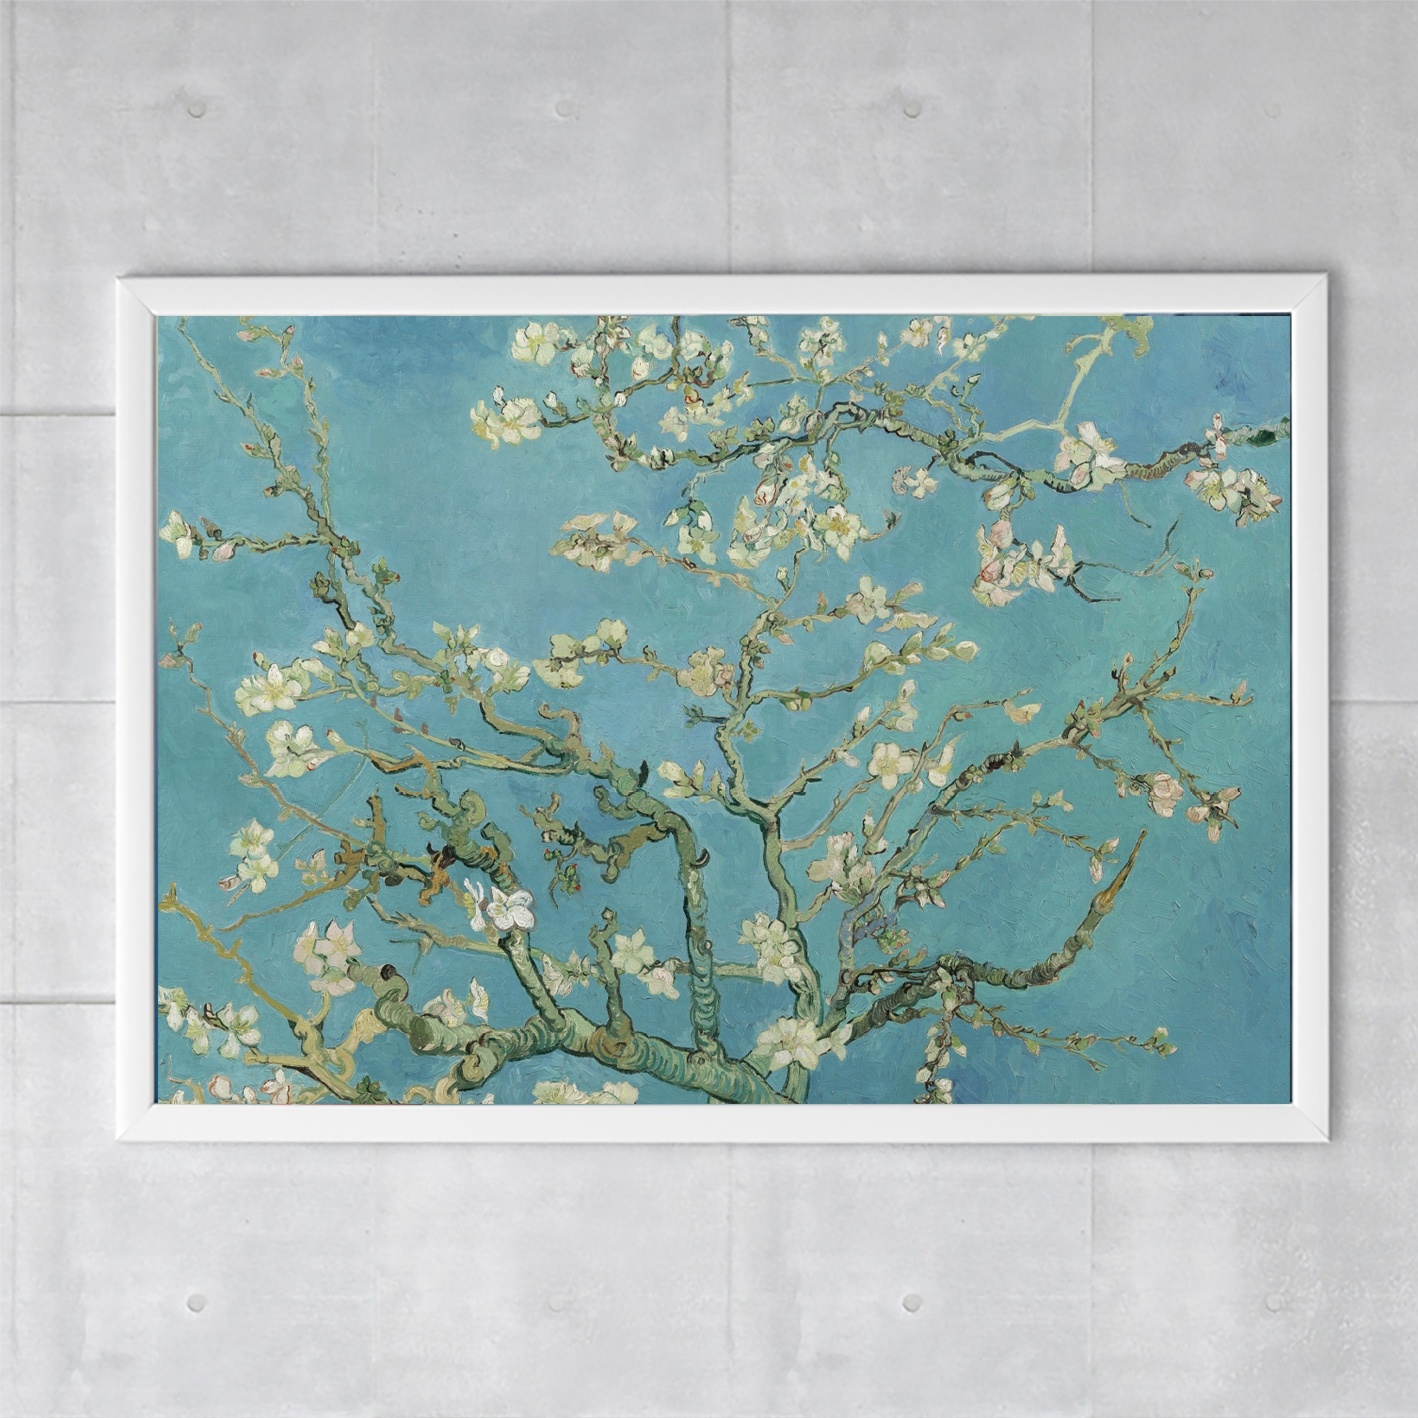 Plakat, Museum - Van Museum-webshop Gogh | Webshop Mandelblüte,